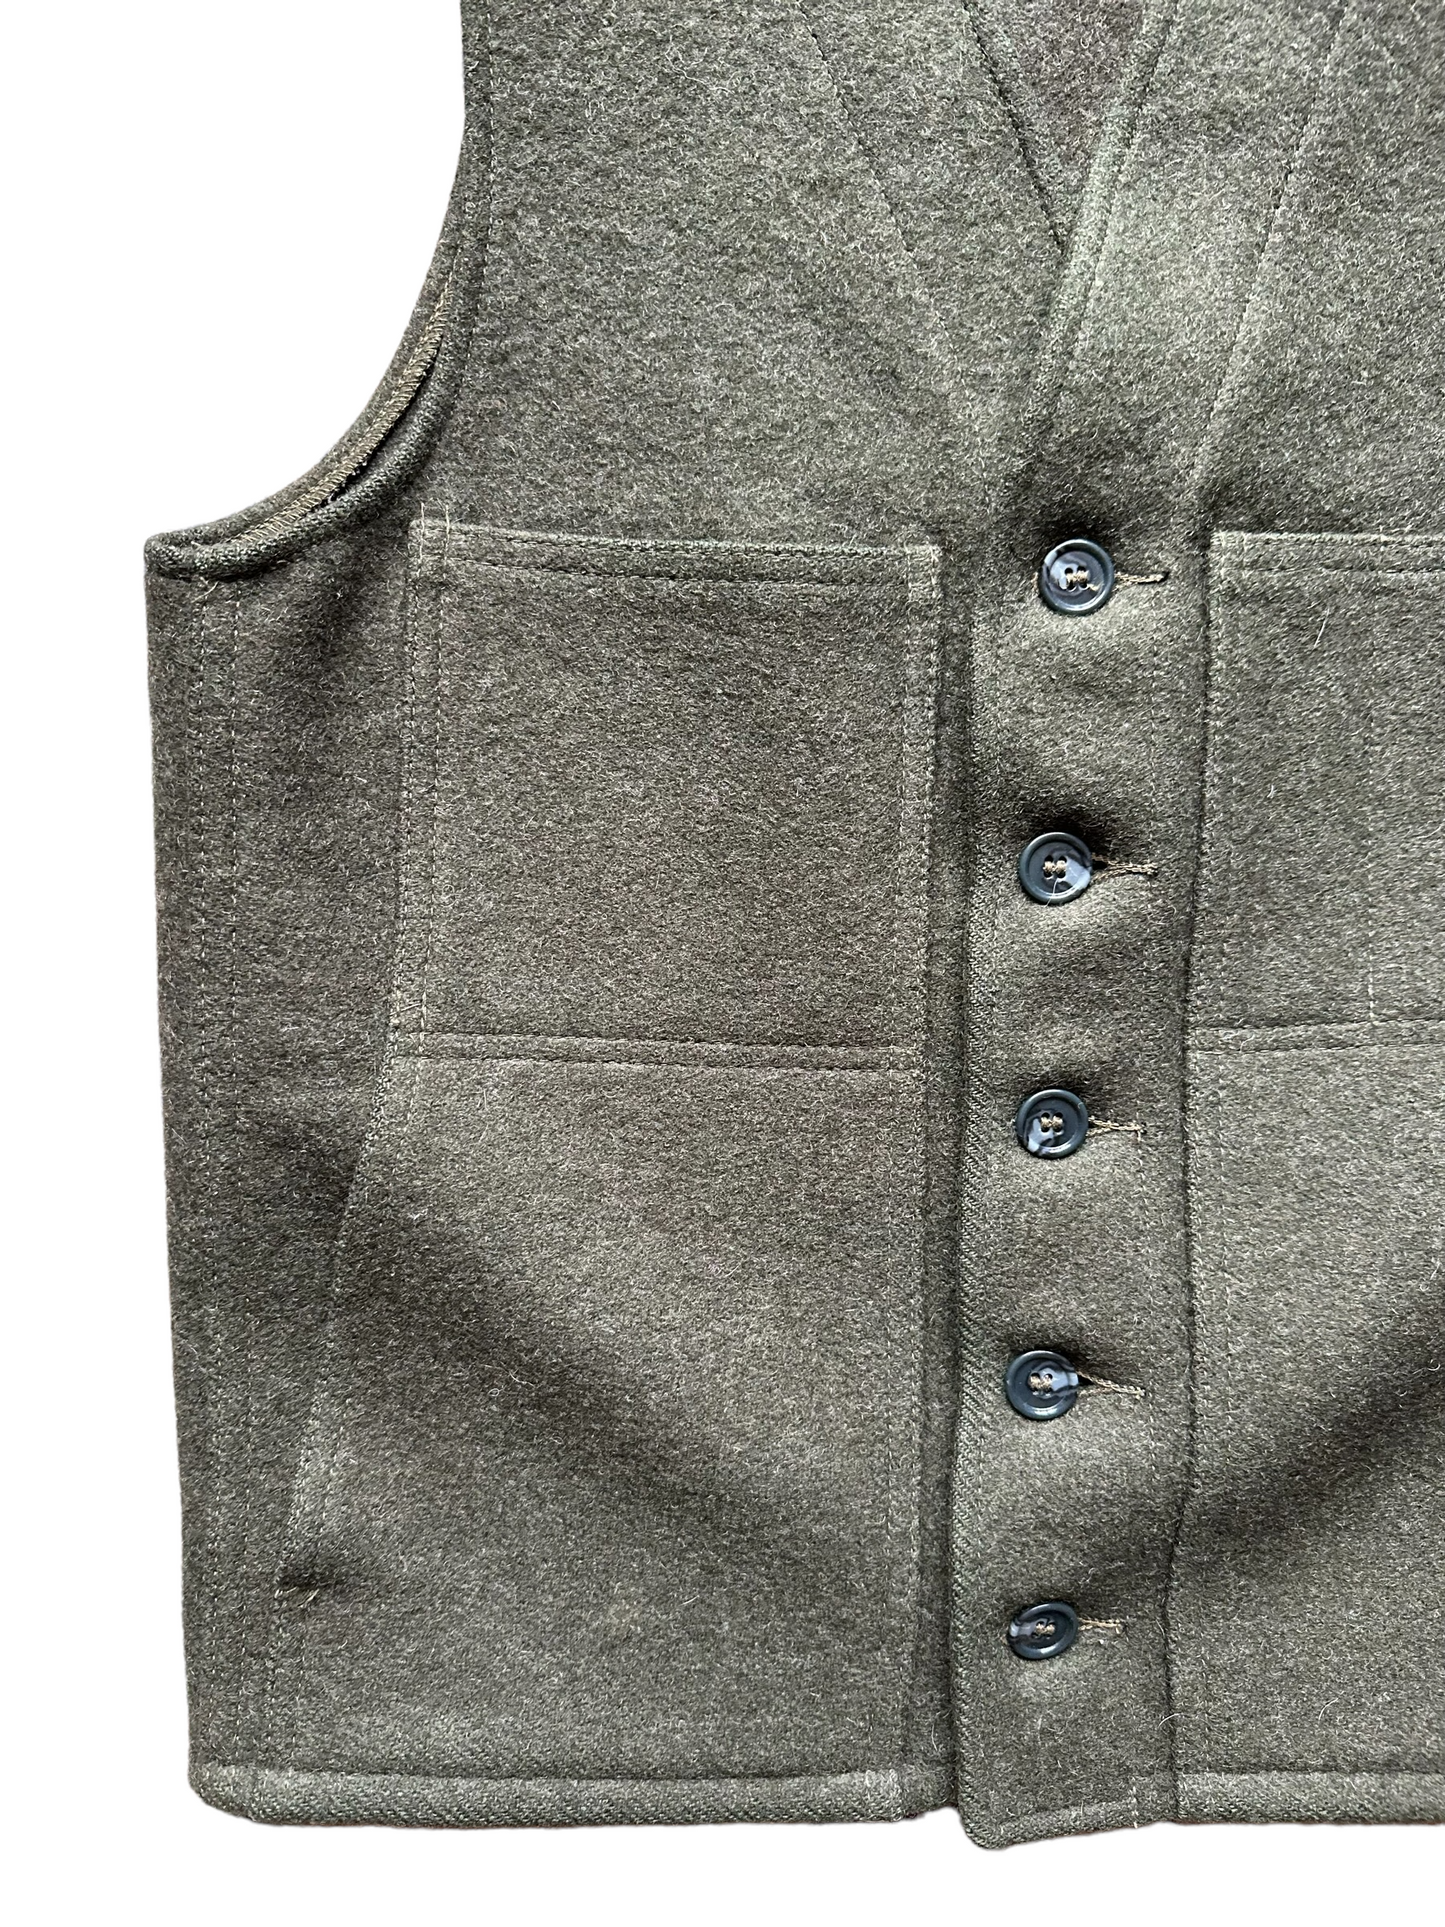 Lower Right Pocket View of Vintage Filson Mackinaw Vest SZ 36 |  Forest Green Wool Vest | Seattle Vintage Workwear